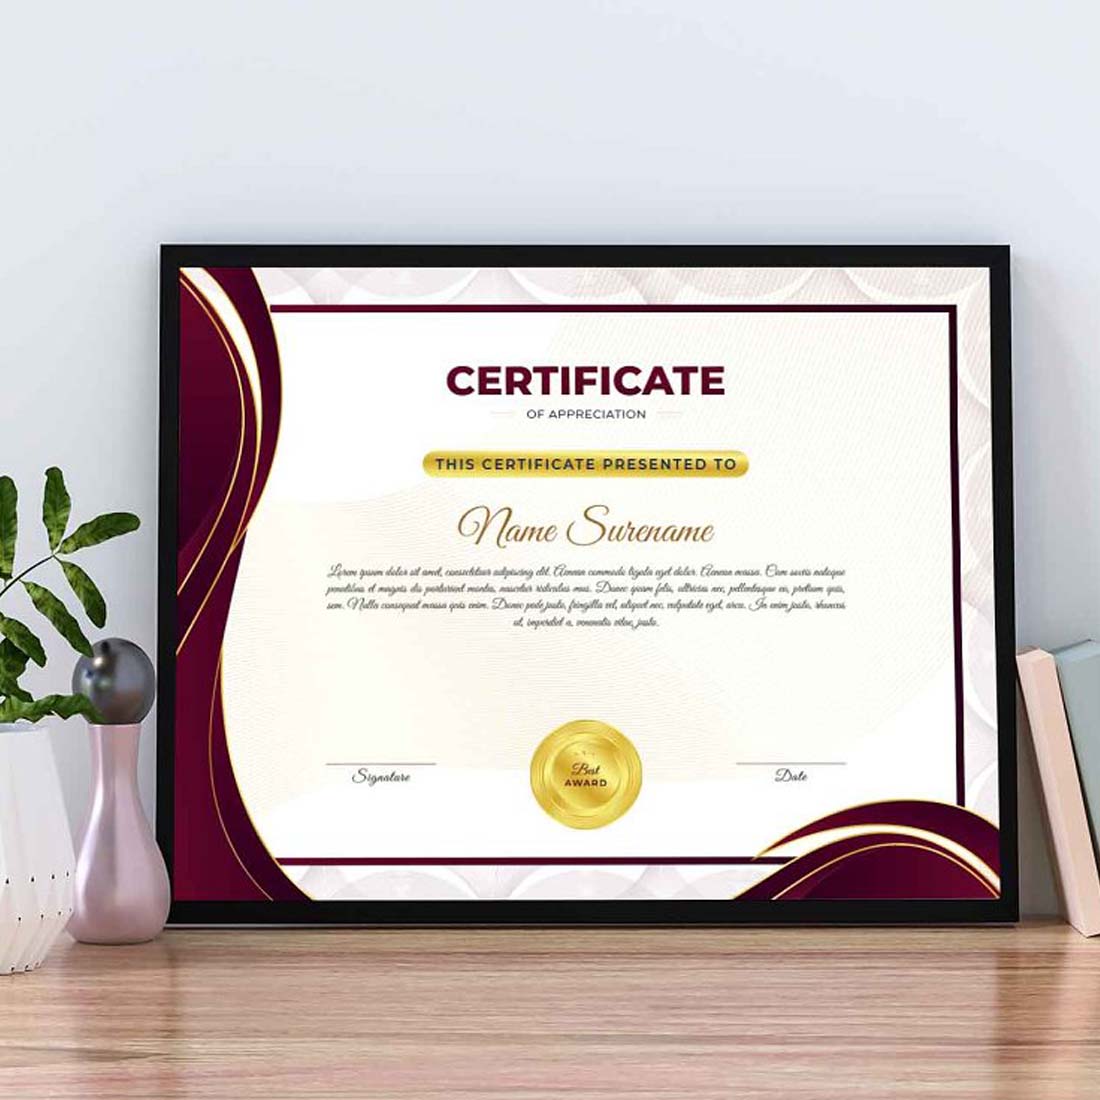 Creative Certificate of Appreciation preview image.